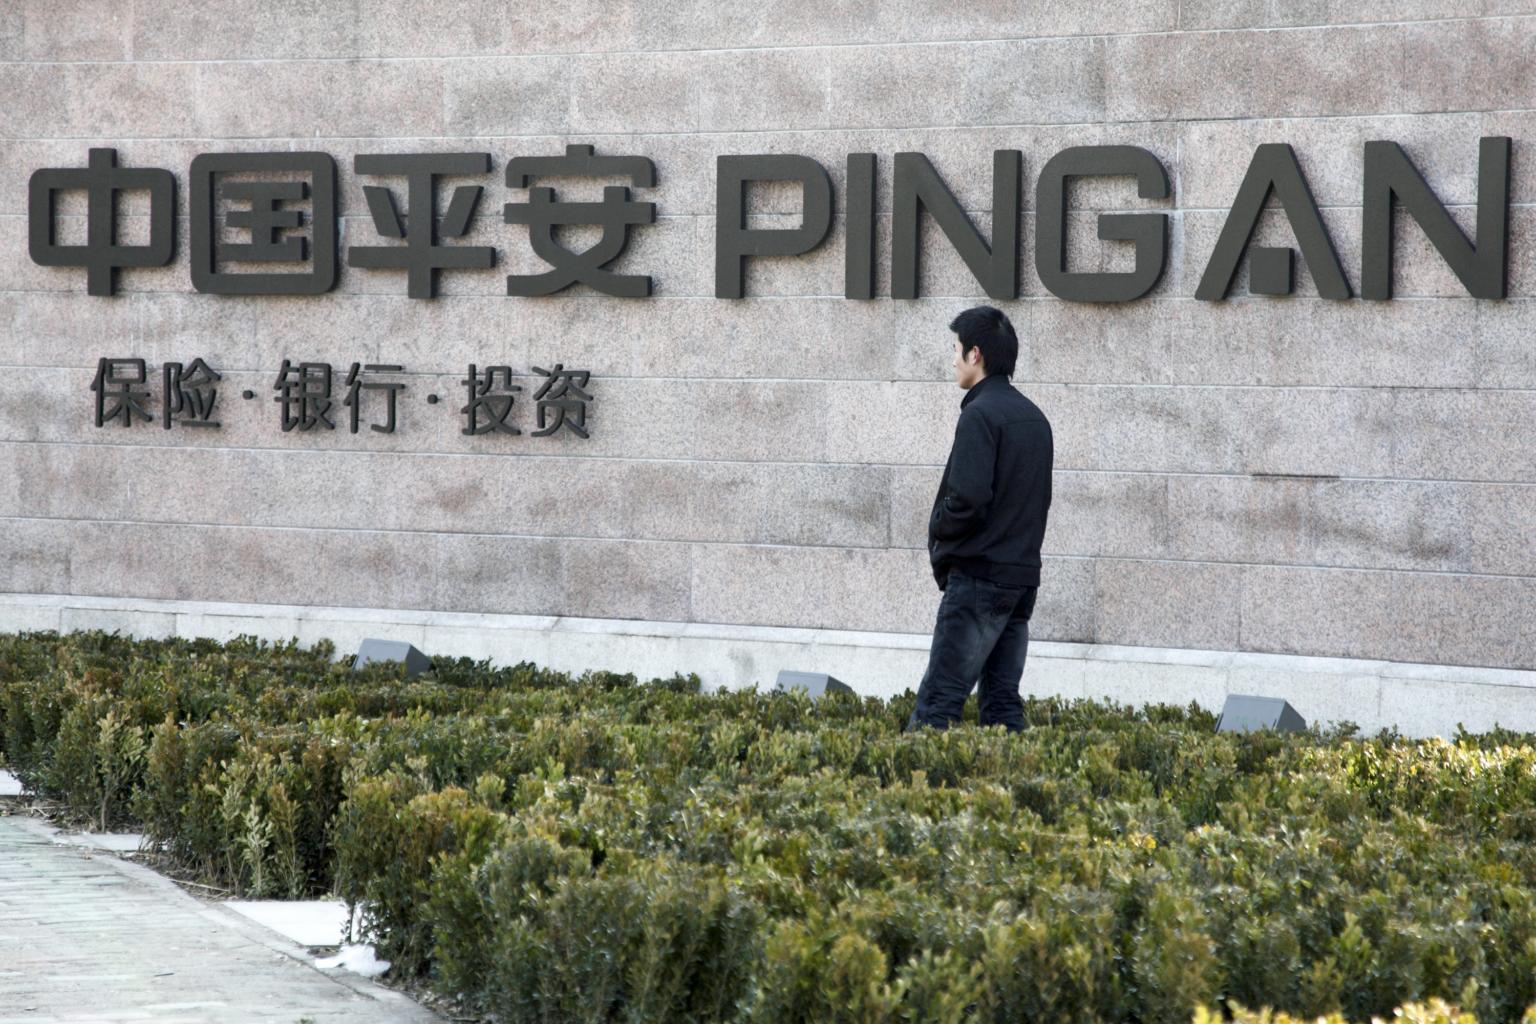 Ping an bank. Pingan китайская компания. “Ping an” компания. Ping an insurance. Компания Ping an insurance.